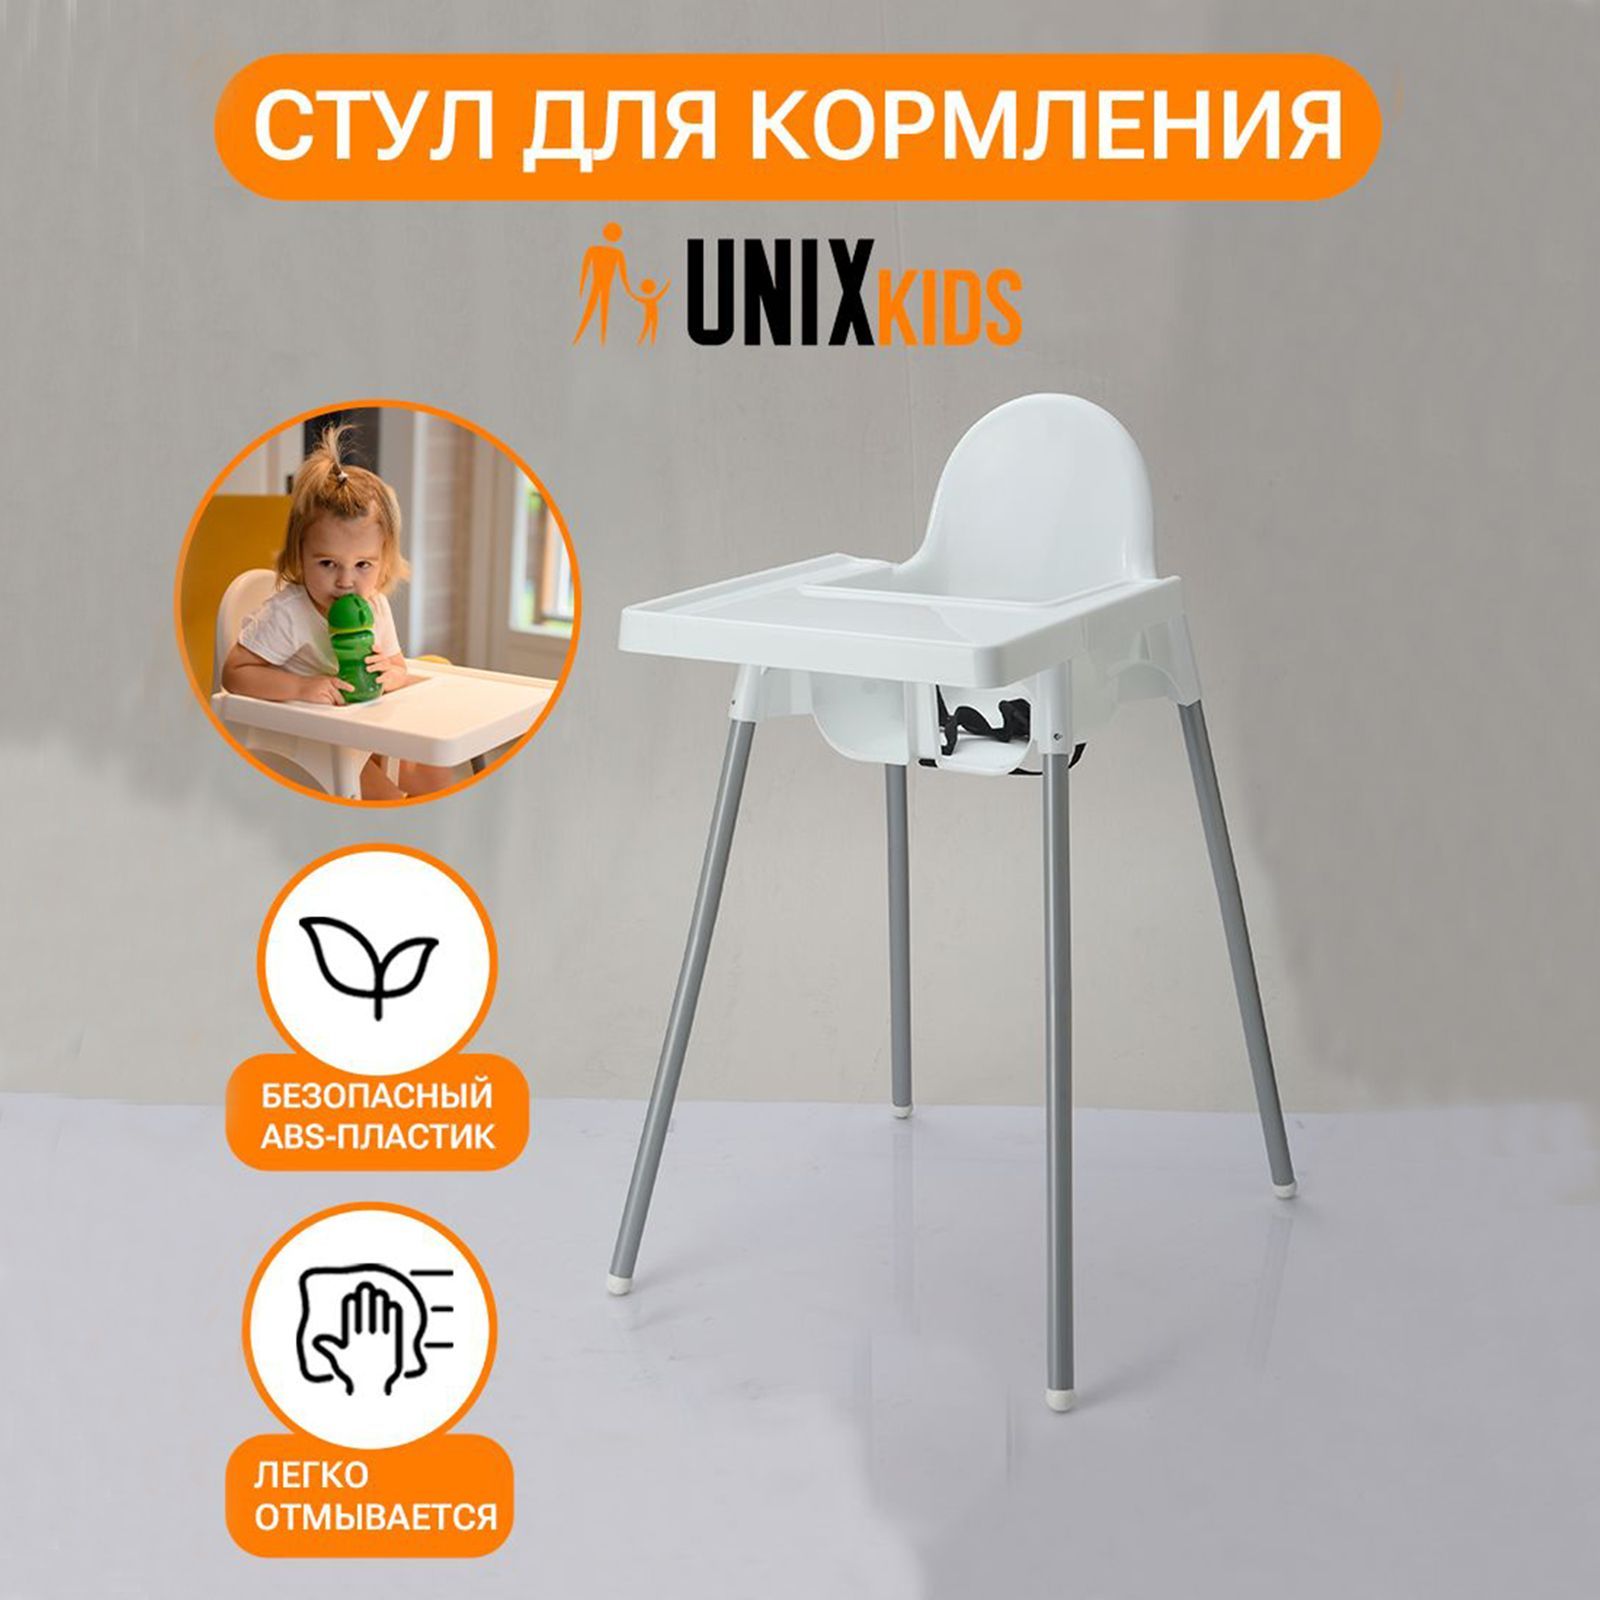 Стульчик для кормления UNIX Kids Fixed White - аналог ИКЕА, со столиком стульчик для кормления polini kids 152 зайки на облачках